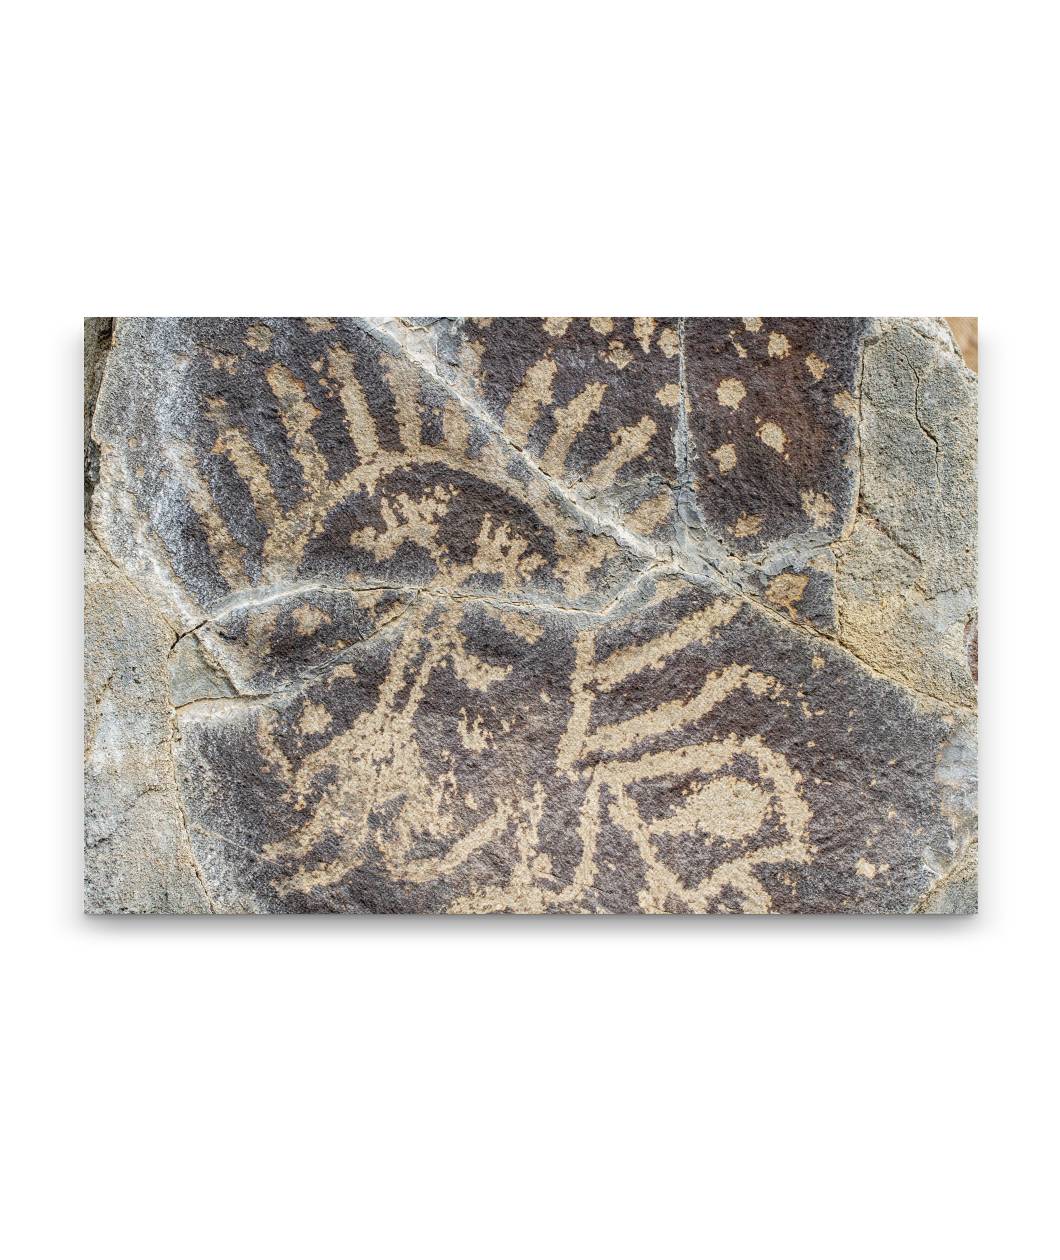 Native American Petroglyphs Interpretive Center, Gingko Petrified Forest State Park, Washington